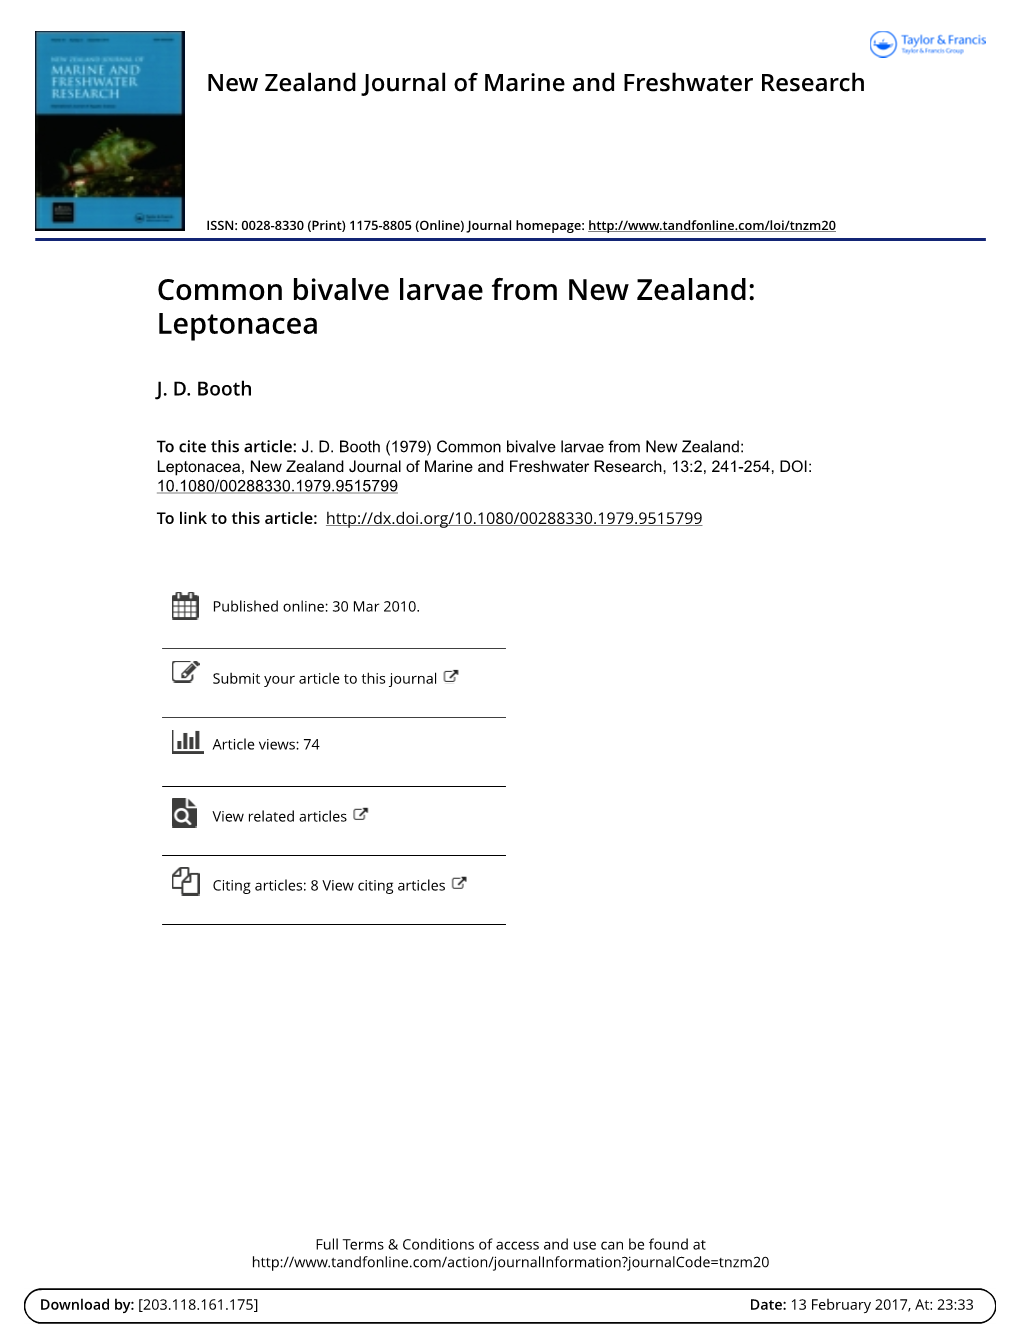 Common Bivalve Larvae from New Zealand: Leptonacea